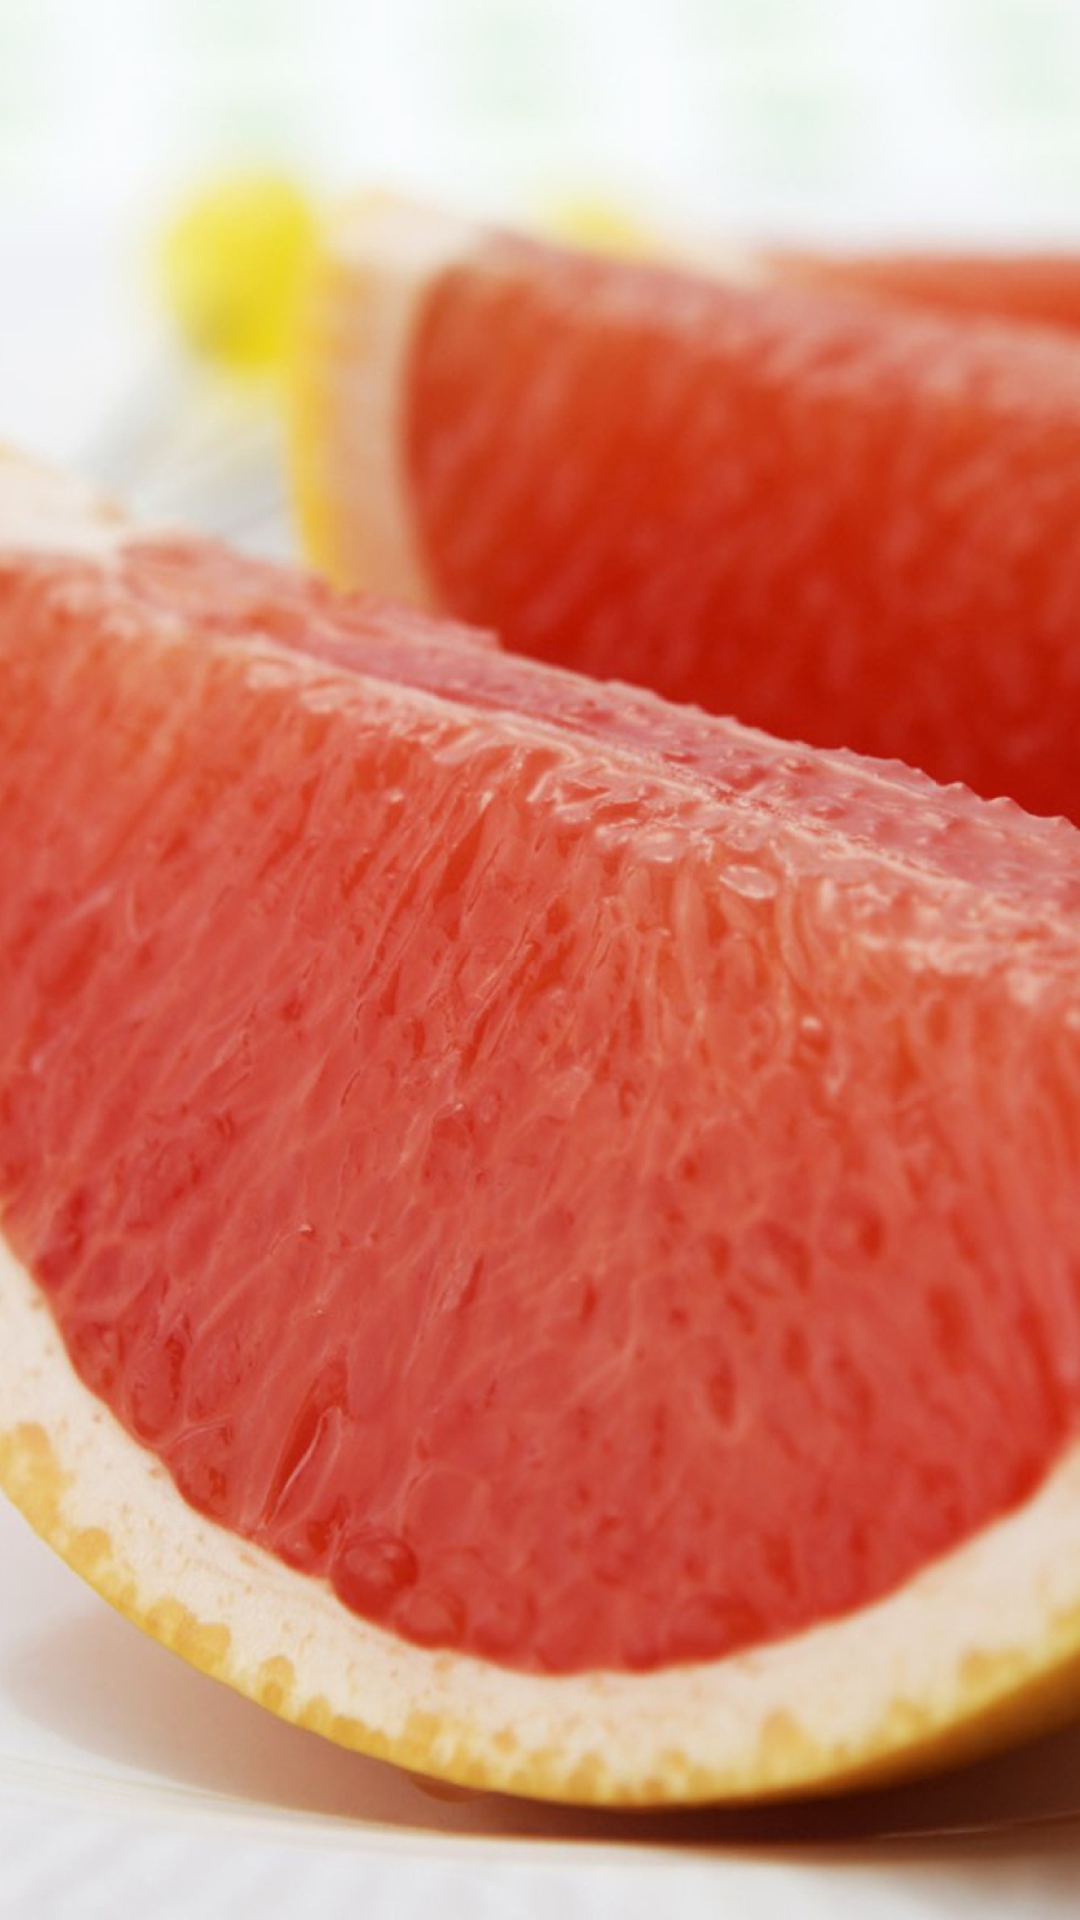 Das Grapefruit Slices Wallpaper 1080x1920